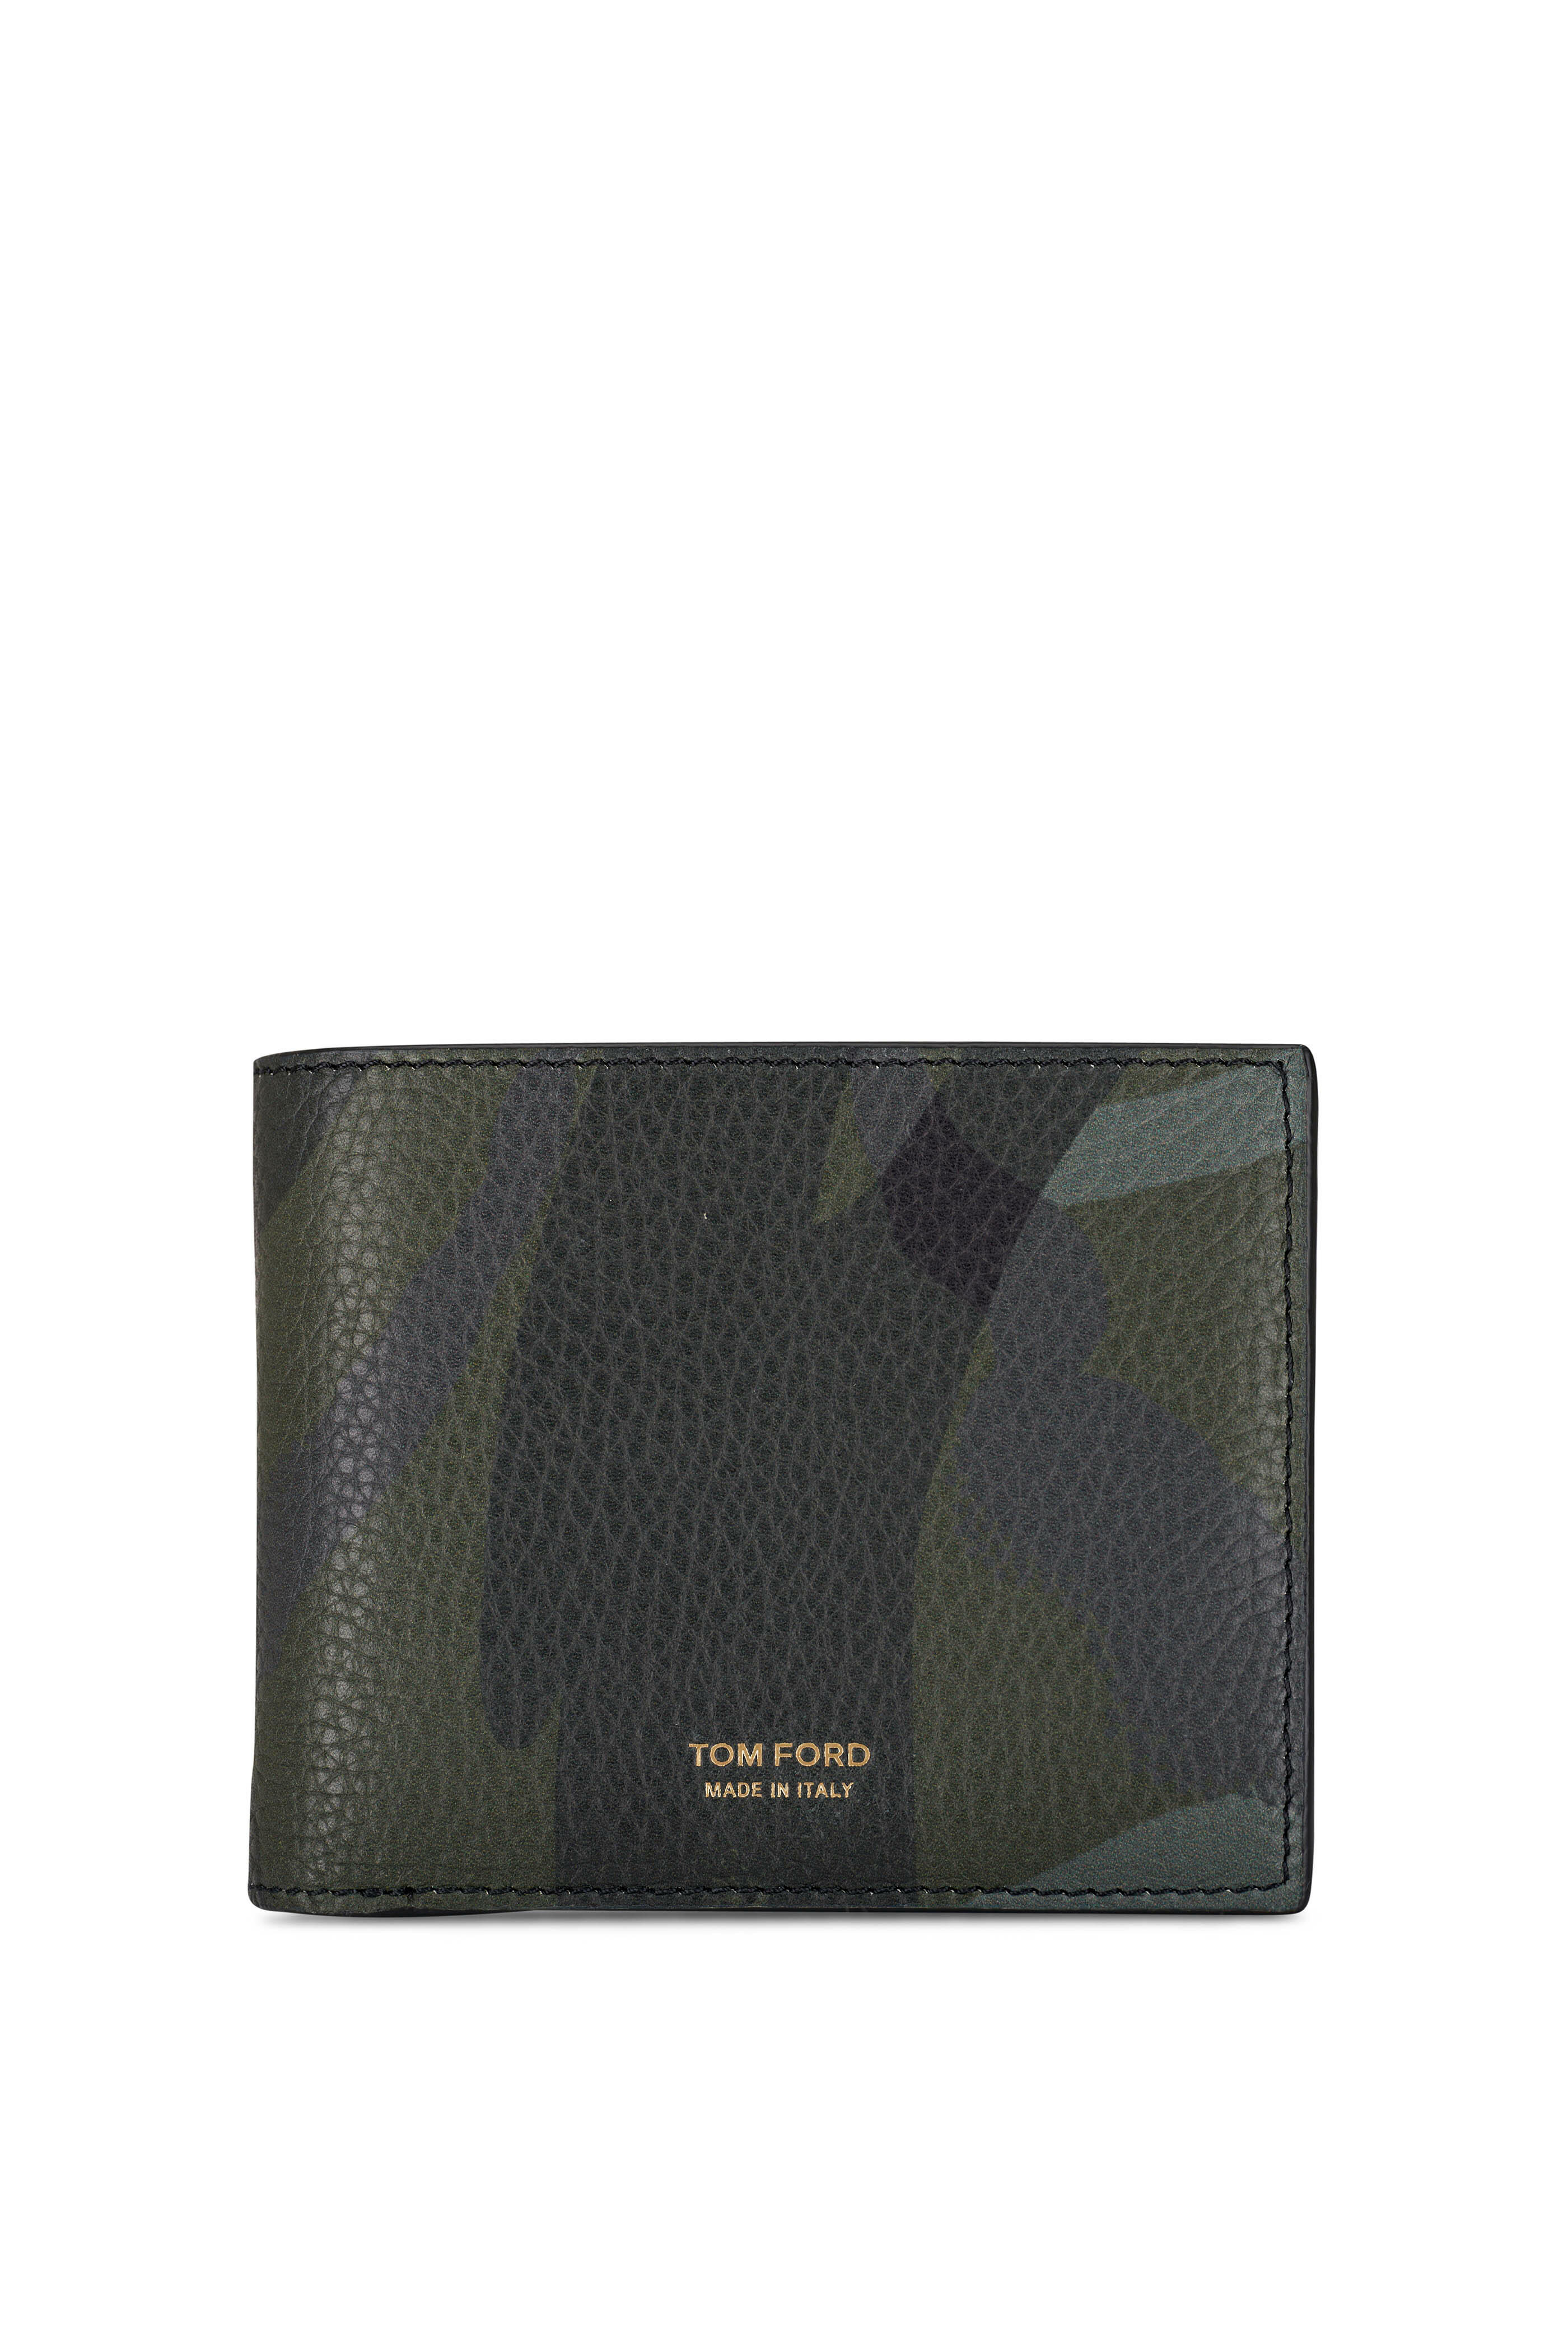 Tom Ford - Green Camo Leather Bi-Fold Wallet